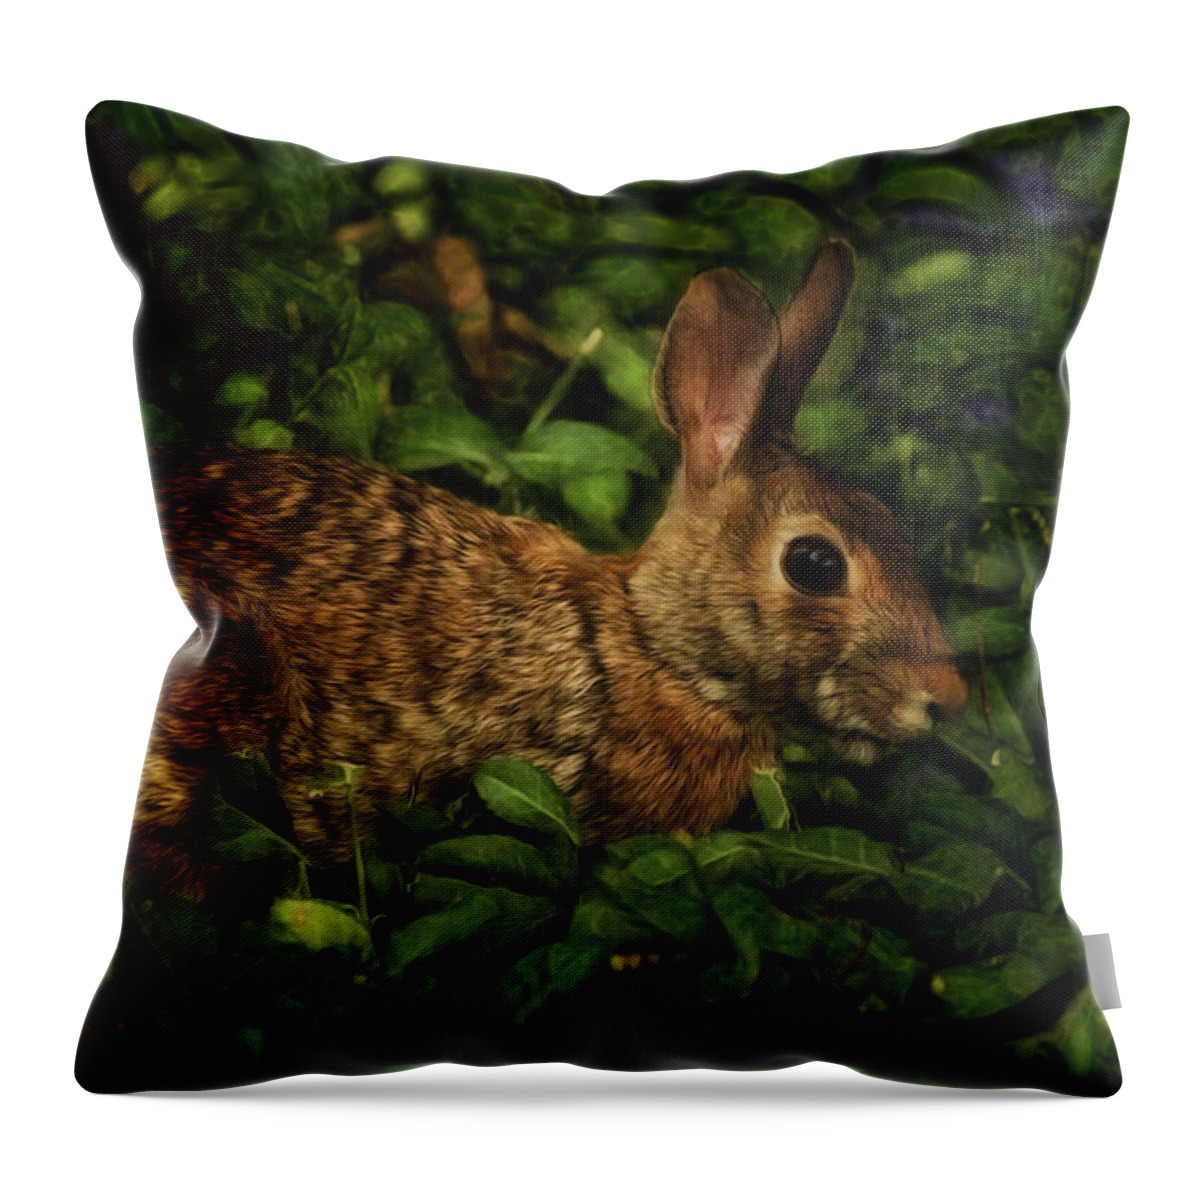 Nature Throw Pillow featuring the photograph Rabbit by Linda Tiepelman